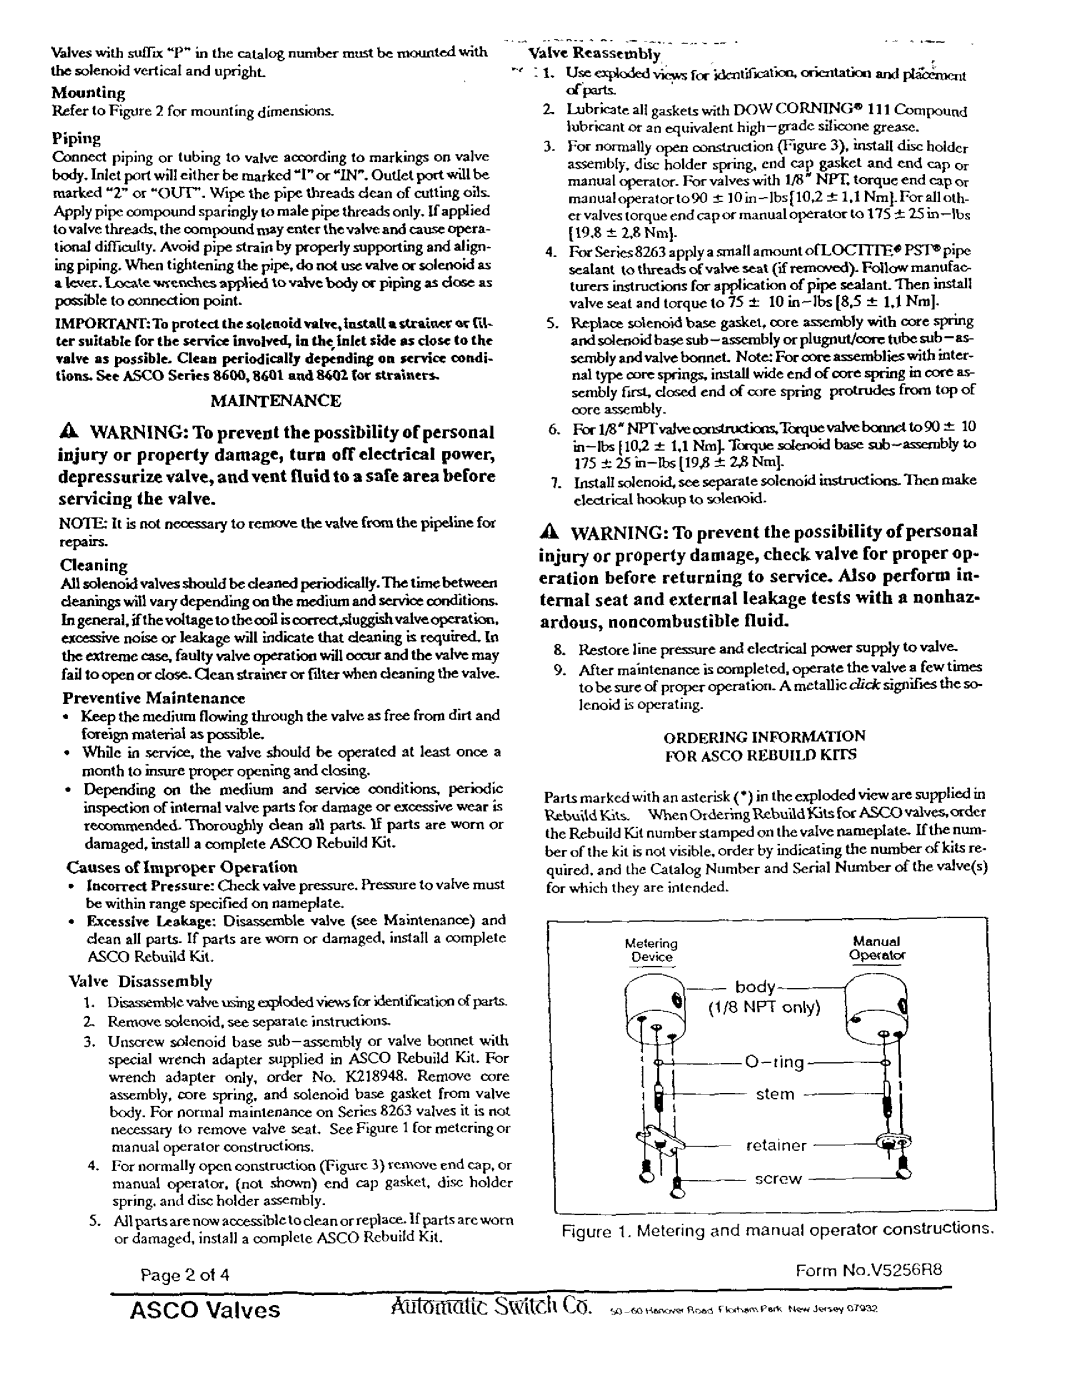 Sterling M-8423, M-8433, M-8413 manual 